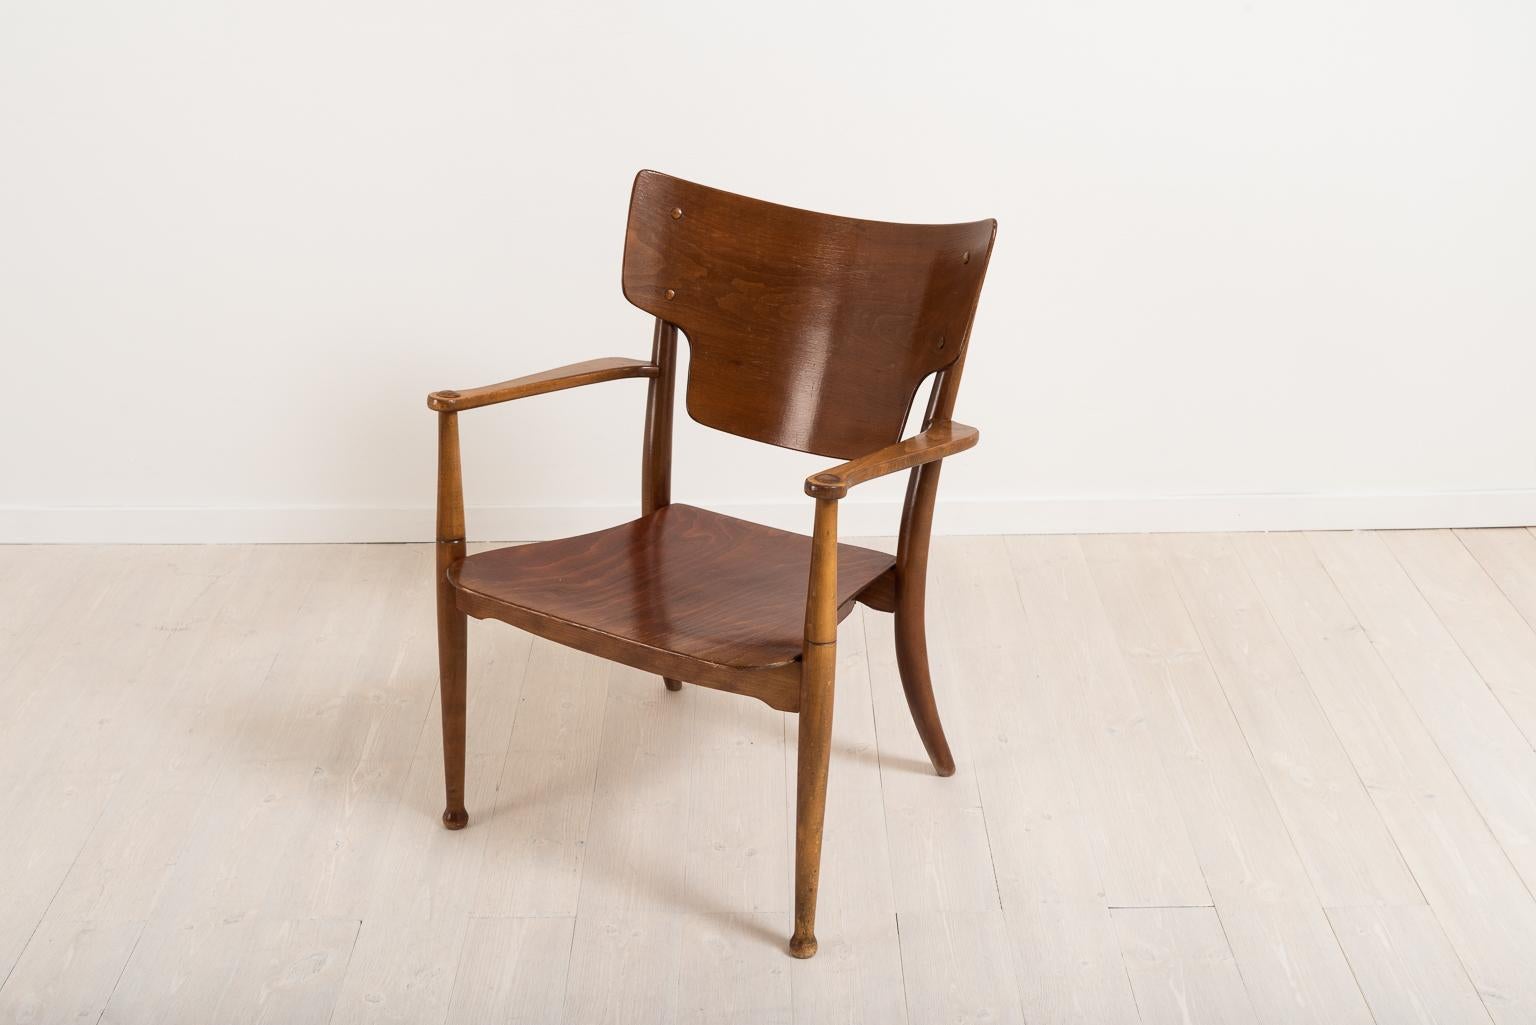 Beech Chair 'Portex' Designed 1944 by Peter Hvidt and Orla Molgaard-Nielsen